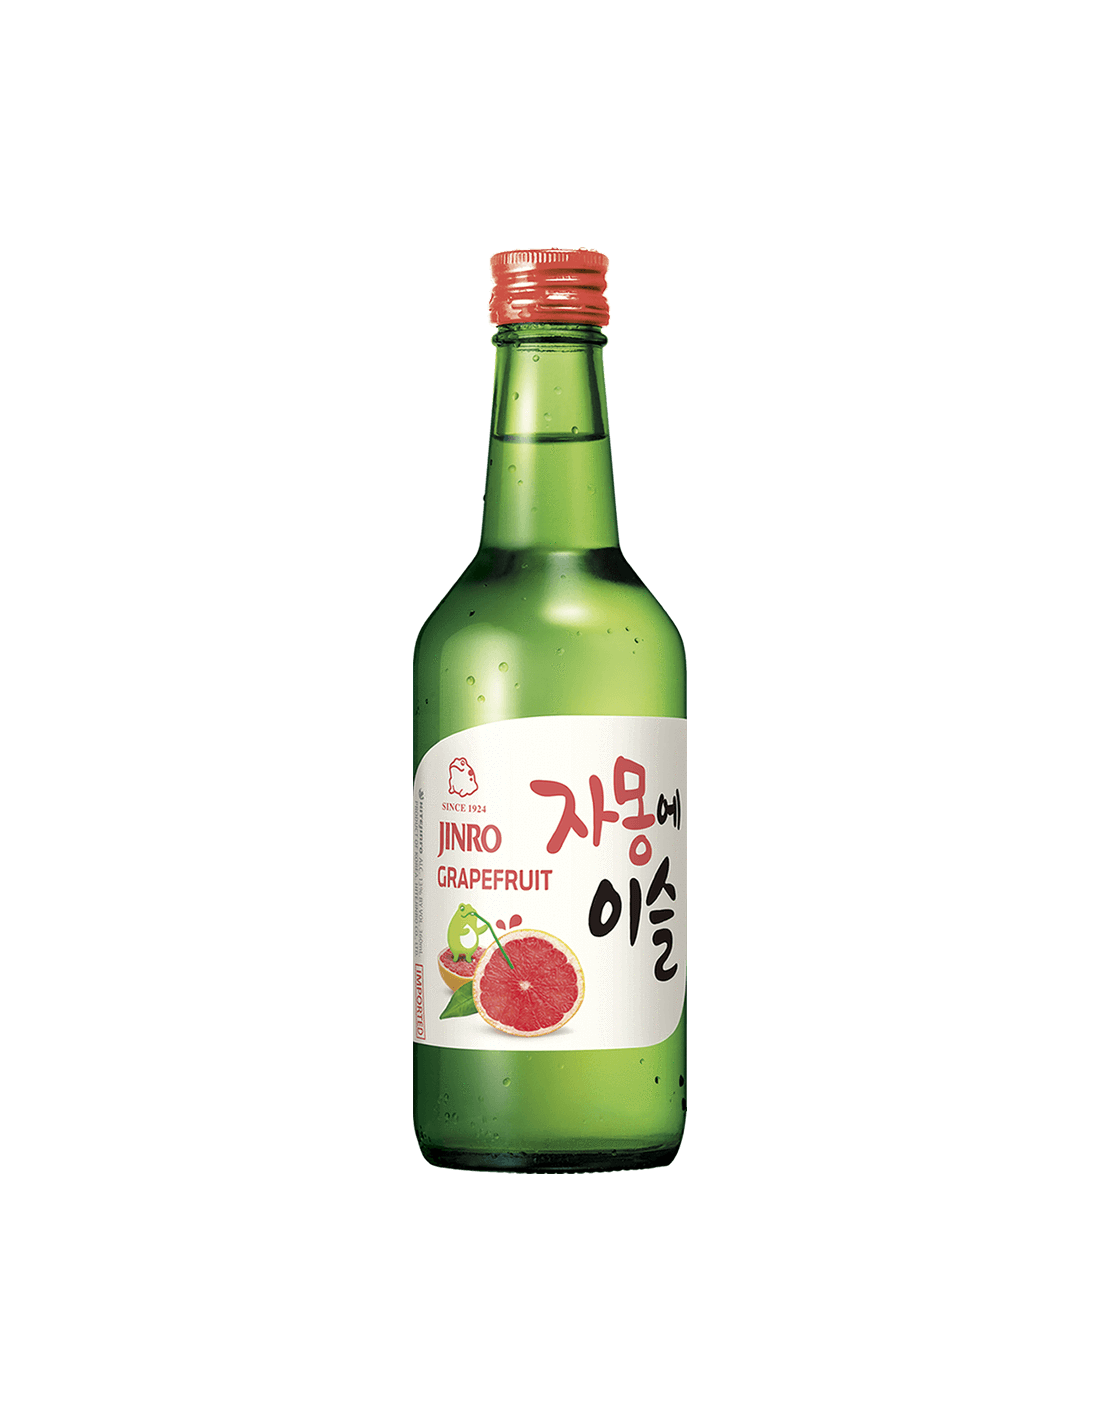 Bautura traditionala Jinro Soju Grapefruit, 24% alc., 0.36L, Coreea